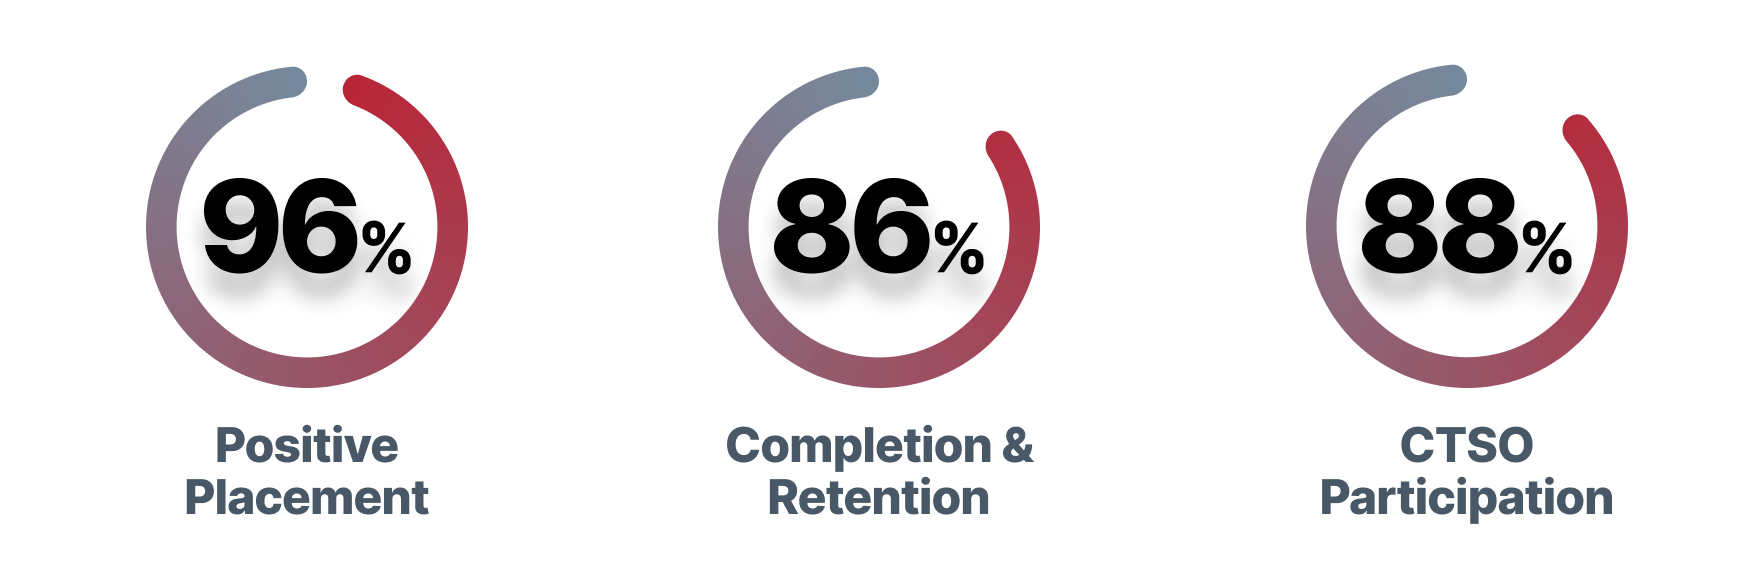 96 Percent Positive Placement 86 Percent Completion and Retention 88 Percent CTSO Participation